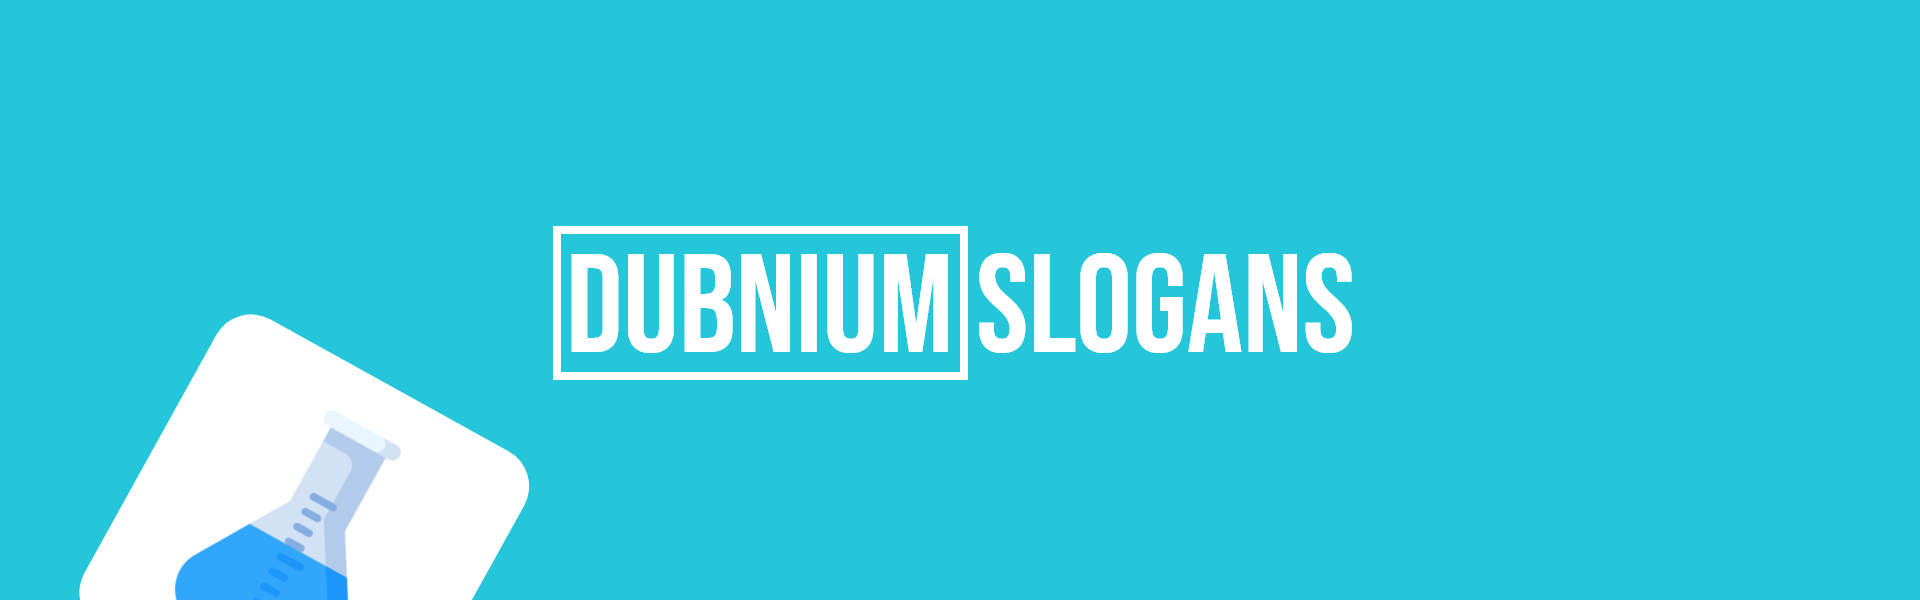 625 Best Dubnium Slogans & Taglines for Your Business